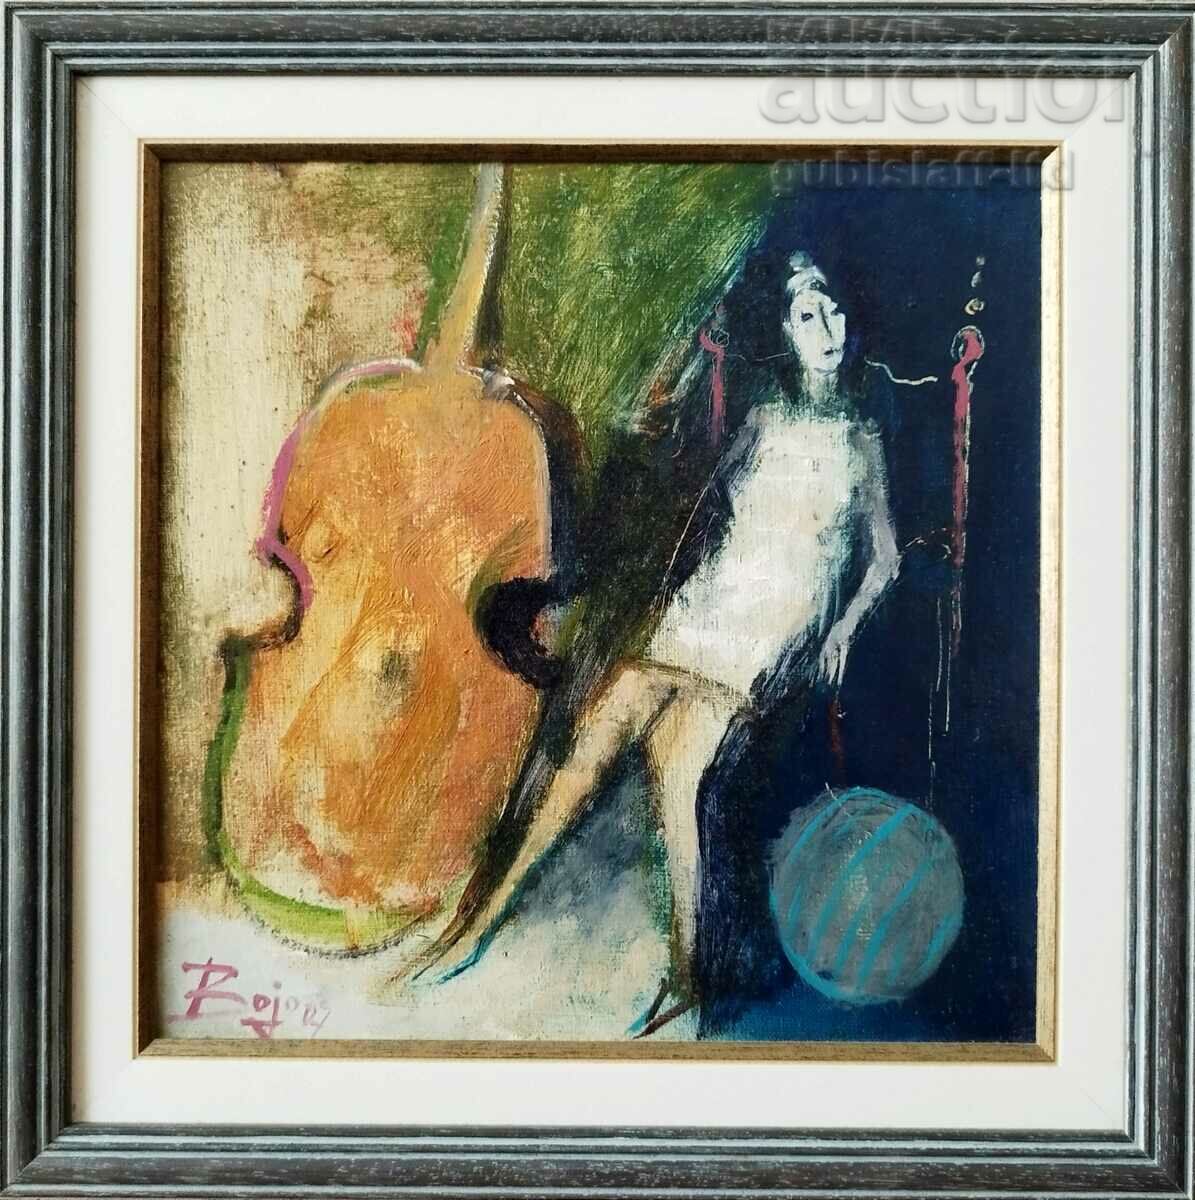 Painting, "Lady with Double Bass", art. Bozhidar Kalachev (1949-2019)